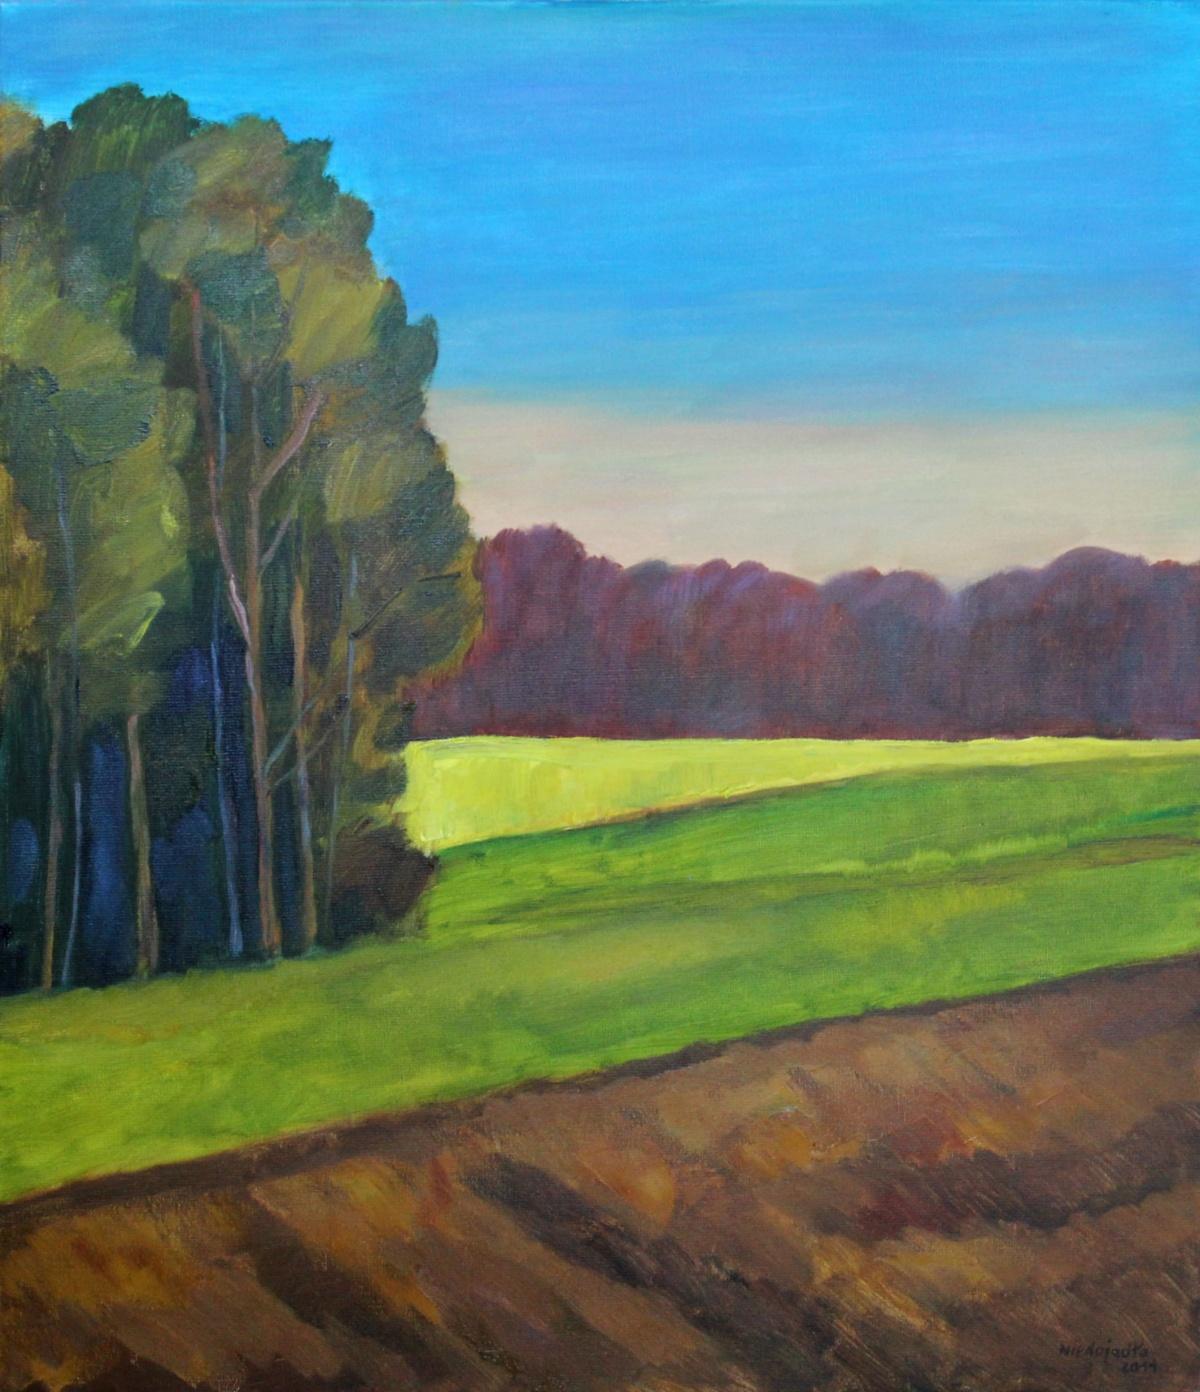 Autumn silence - XXI century, Oil landscape painting, Colourful